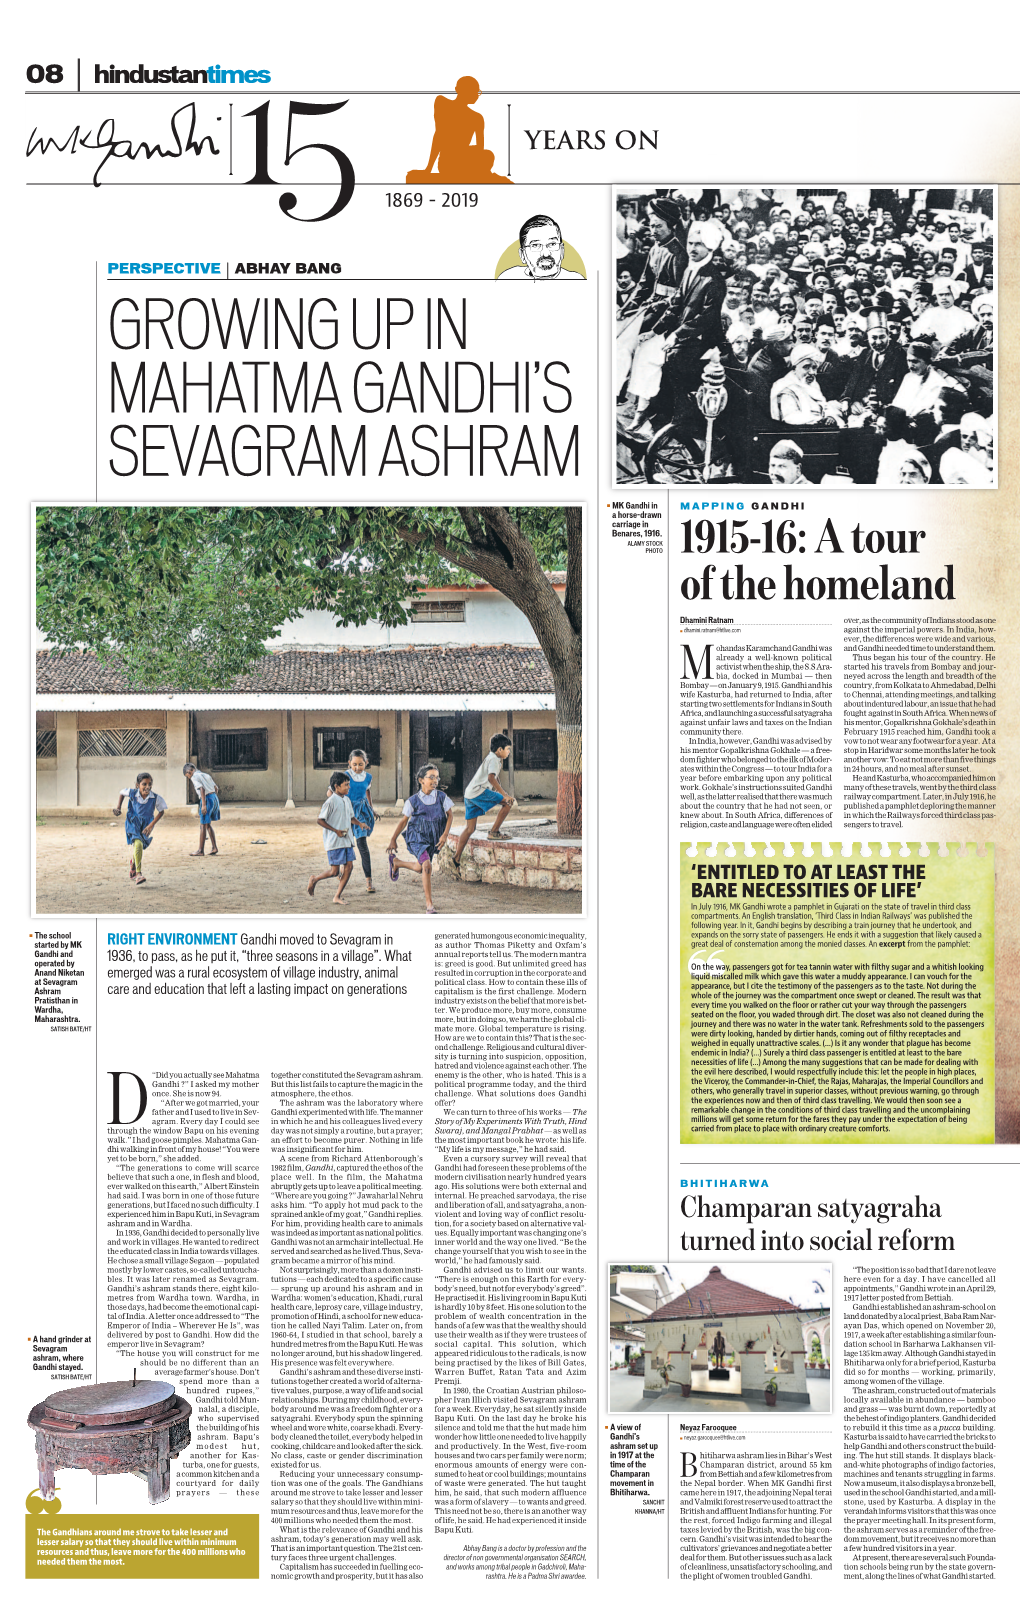 Growing up in Mahatma Gandhi's Sevagram Ashram